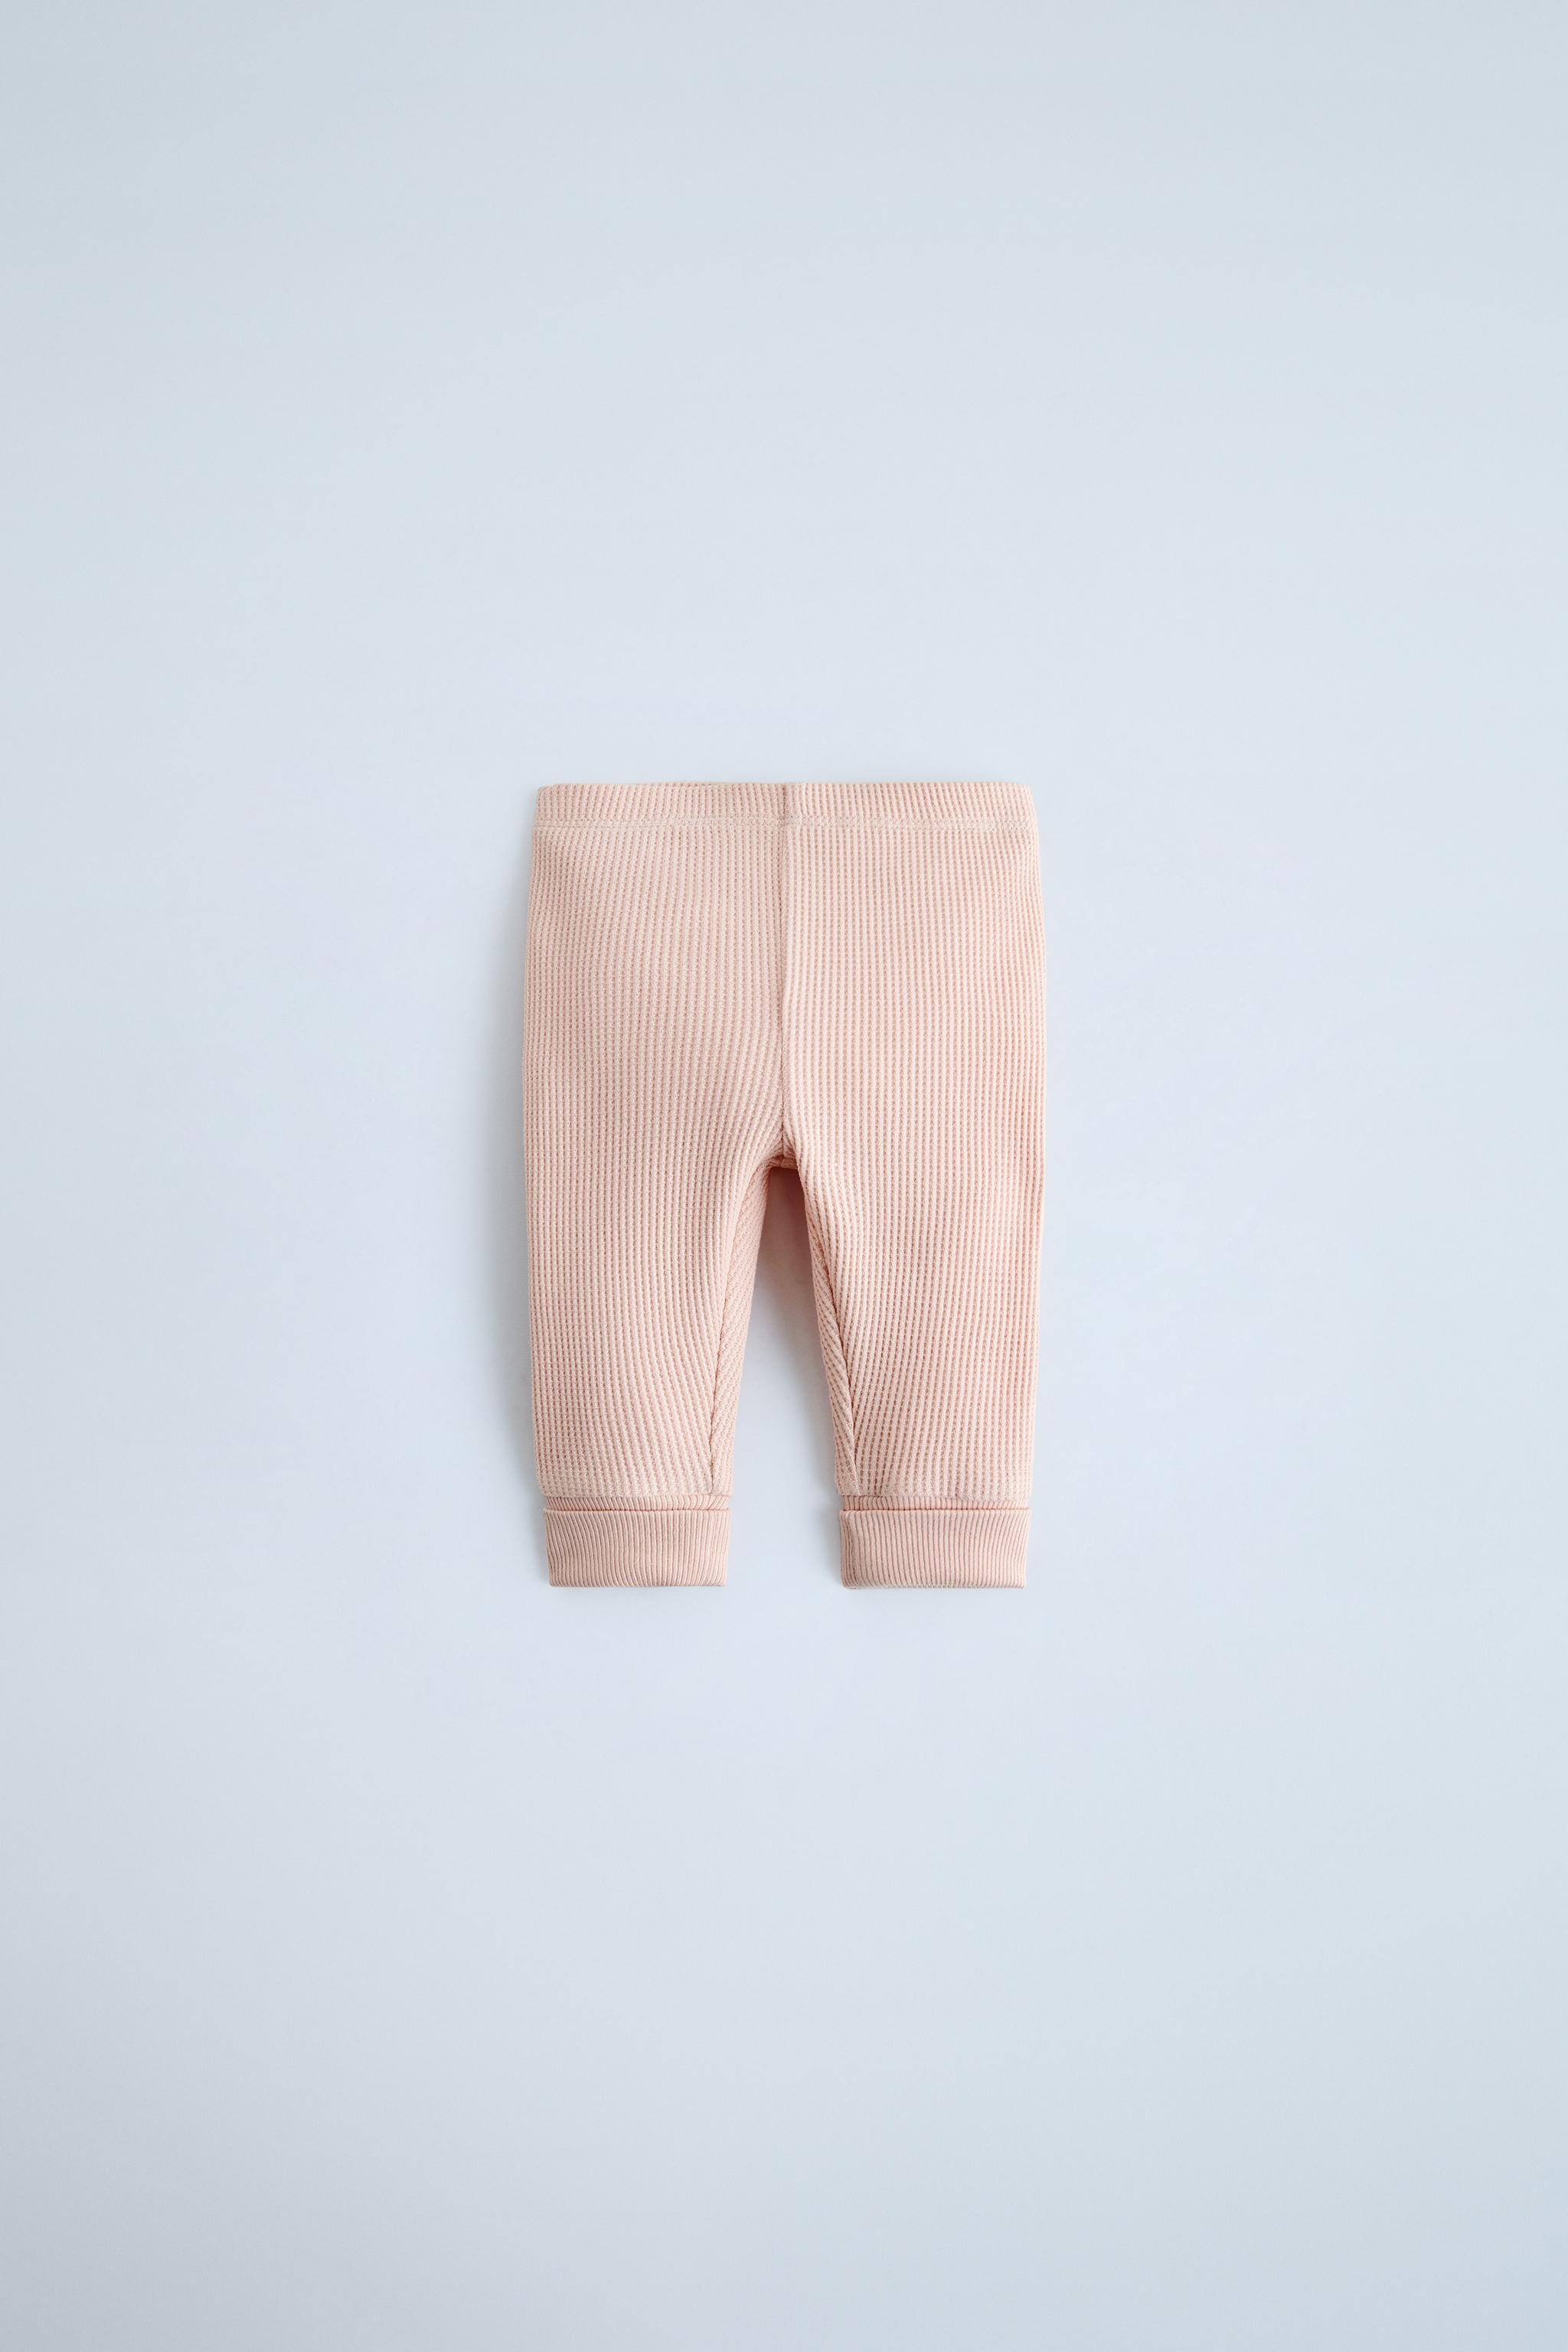 Zara, Bottoms, Zara Kids Knit Leggings